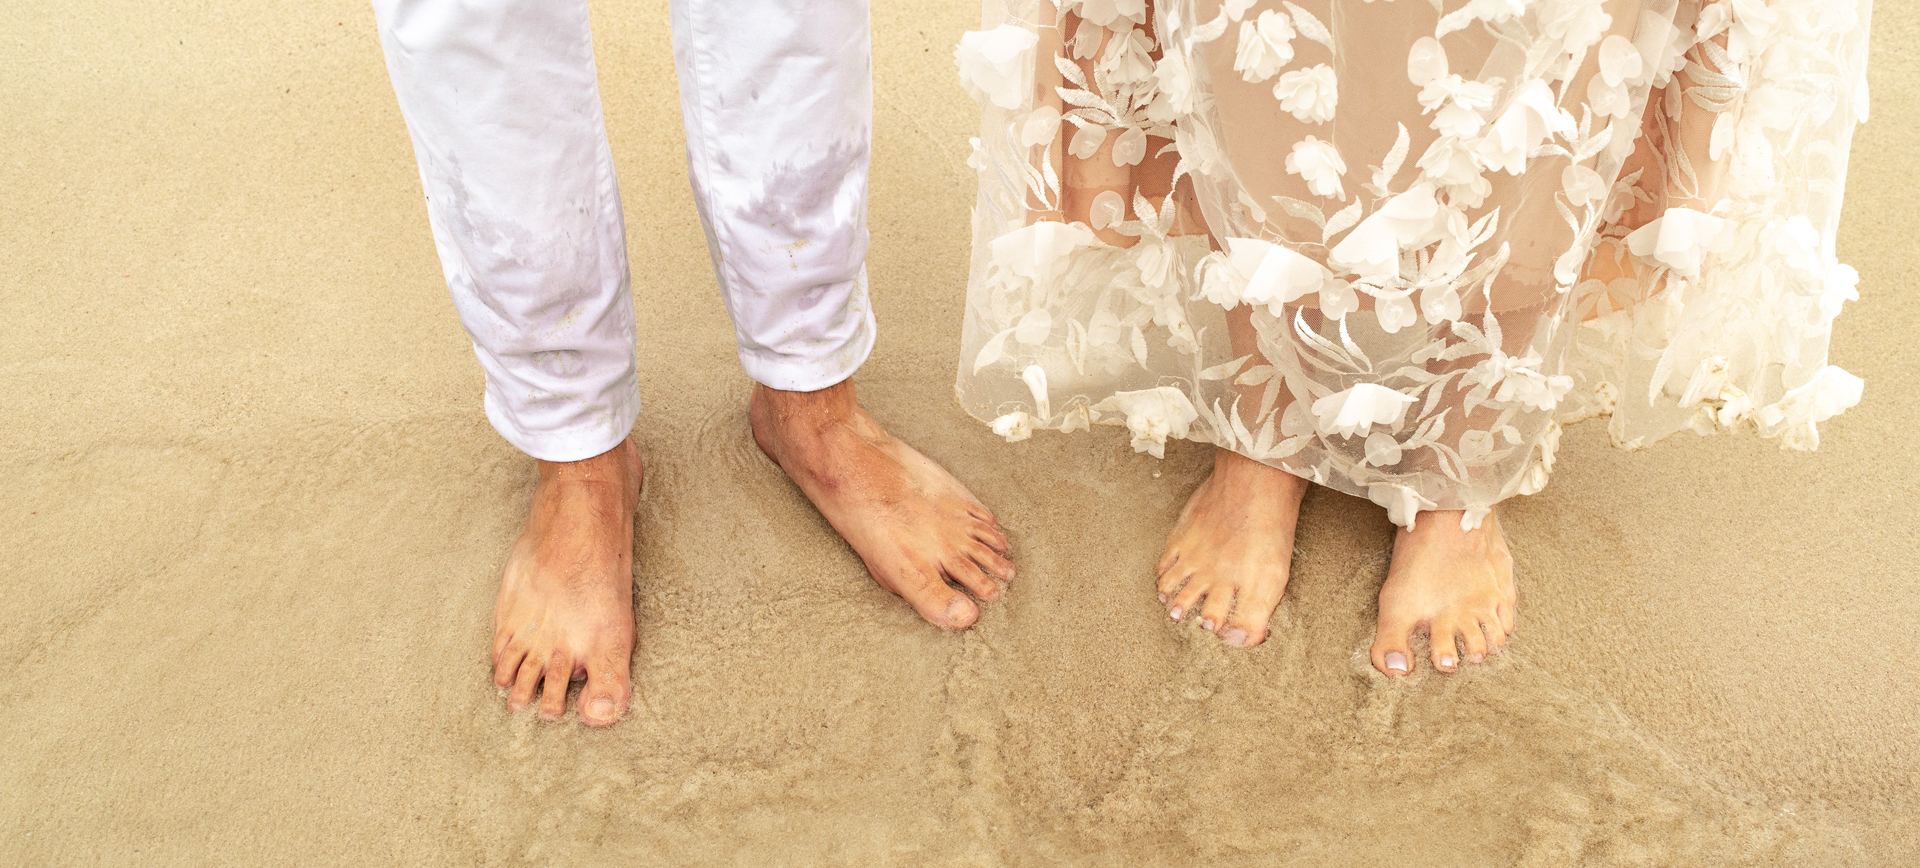 mallorca santanyi elopement wedding - footprints of bride and groom